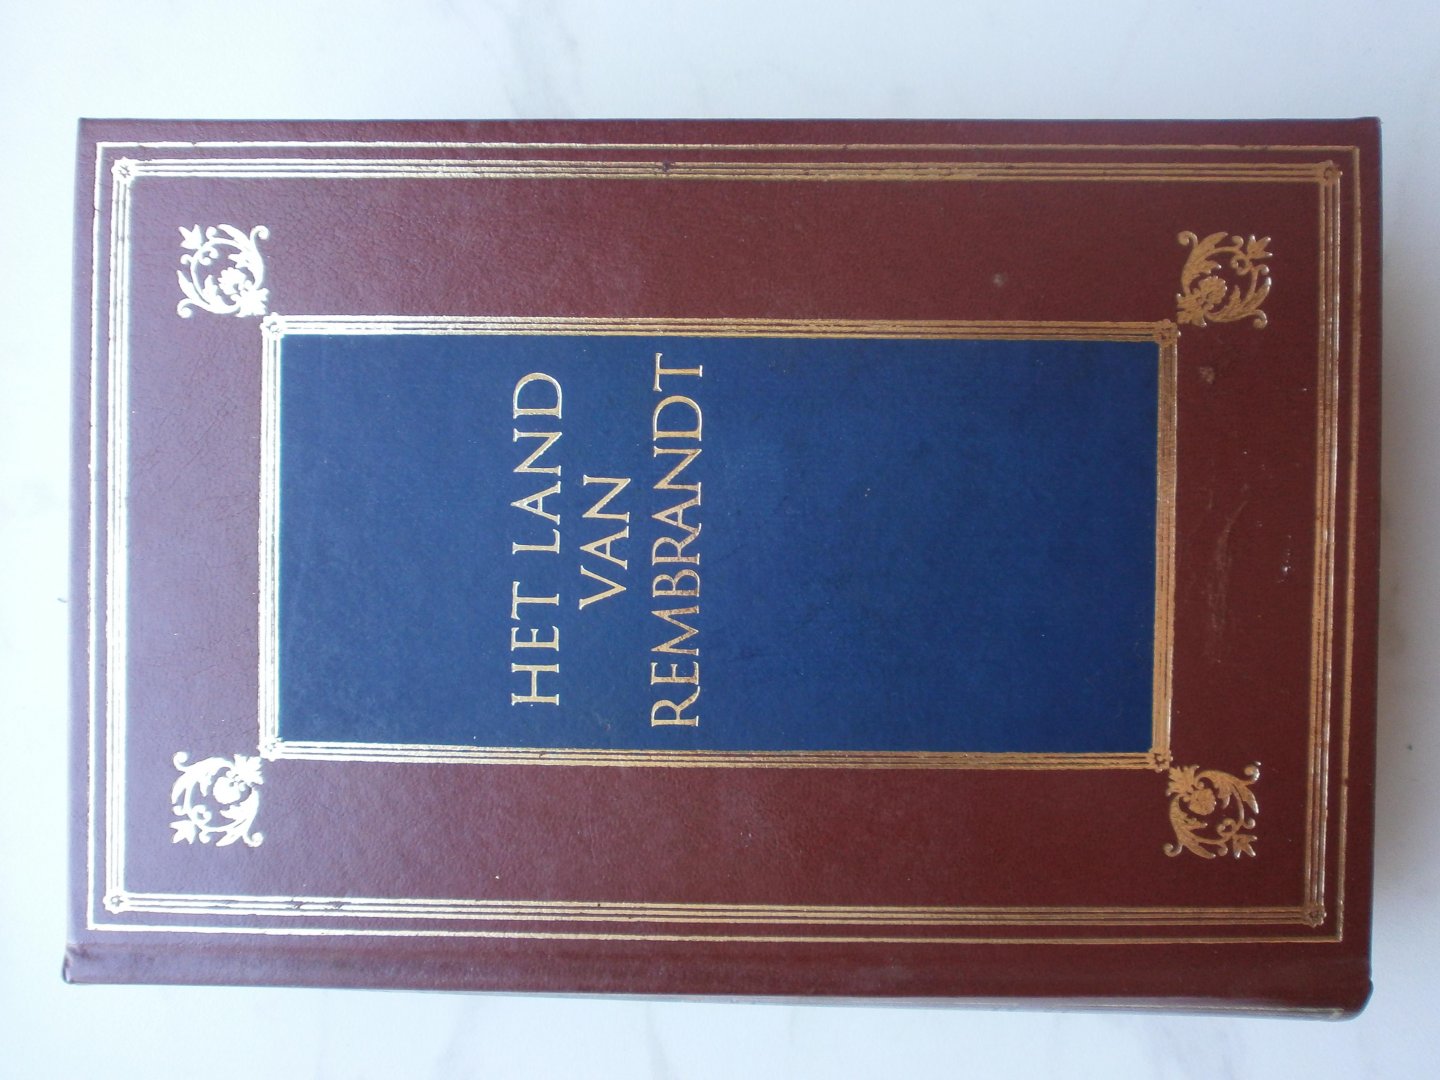 Busken Huet, Conrad - Land van rembrandt / druk 1